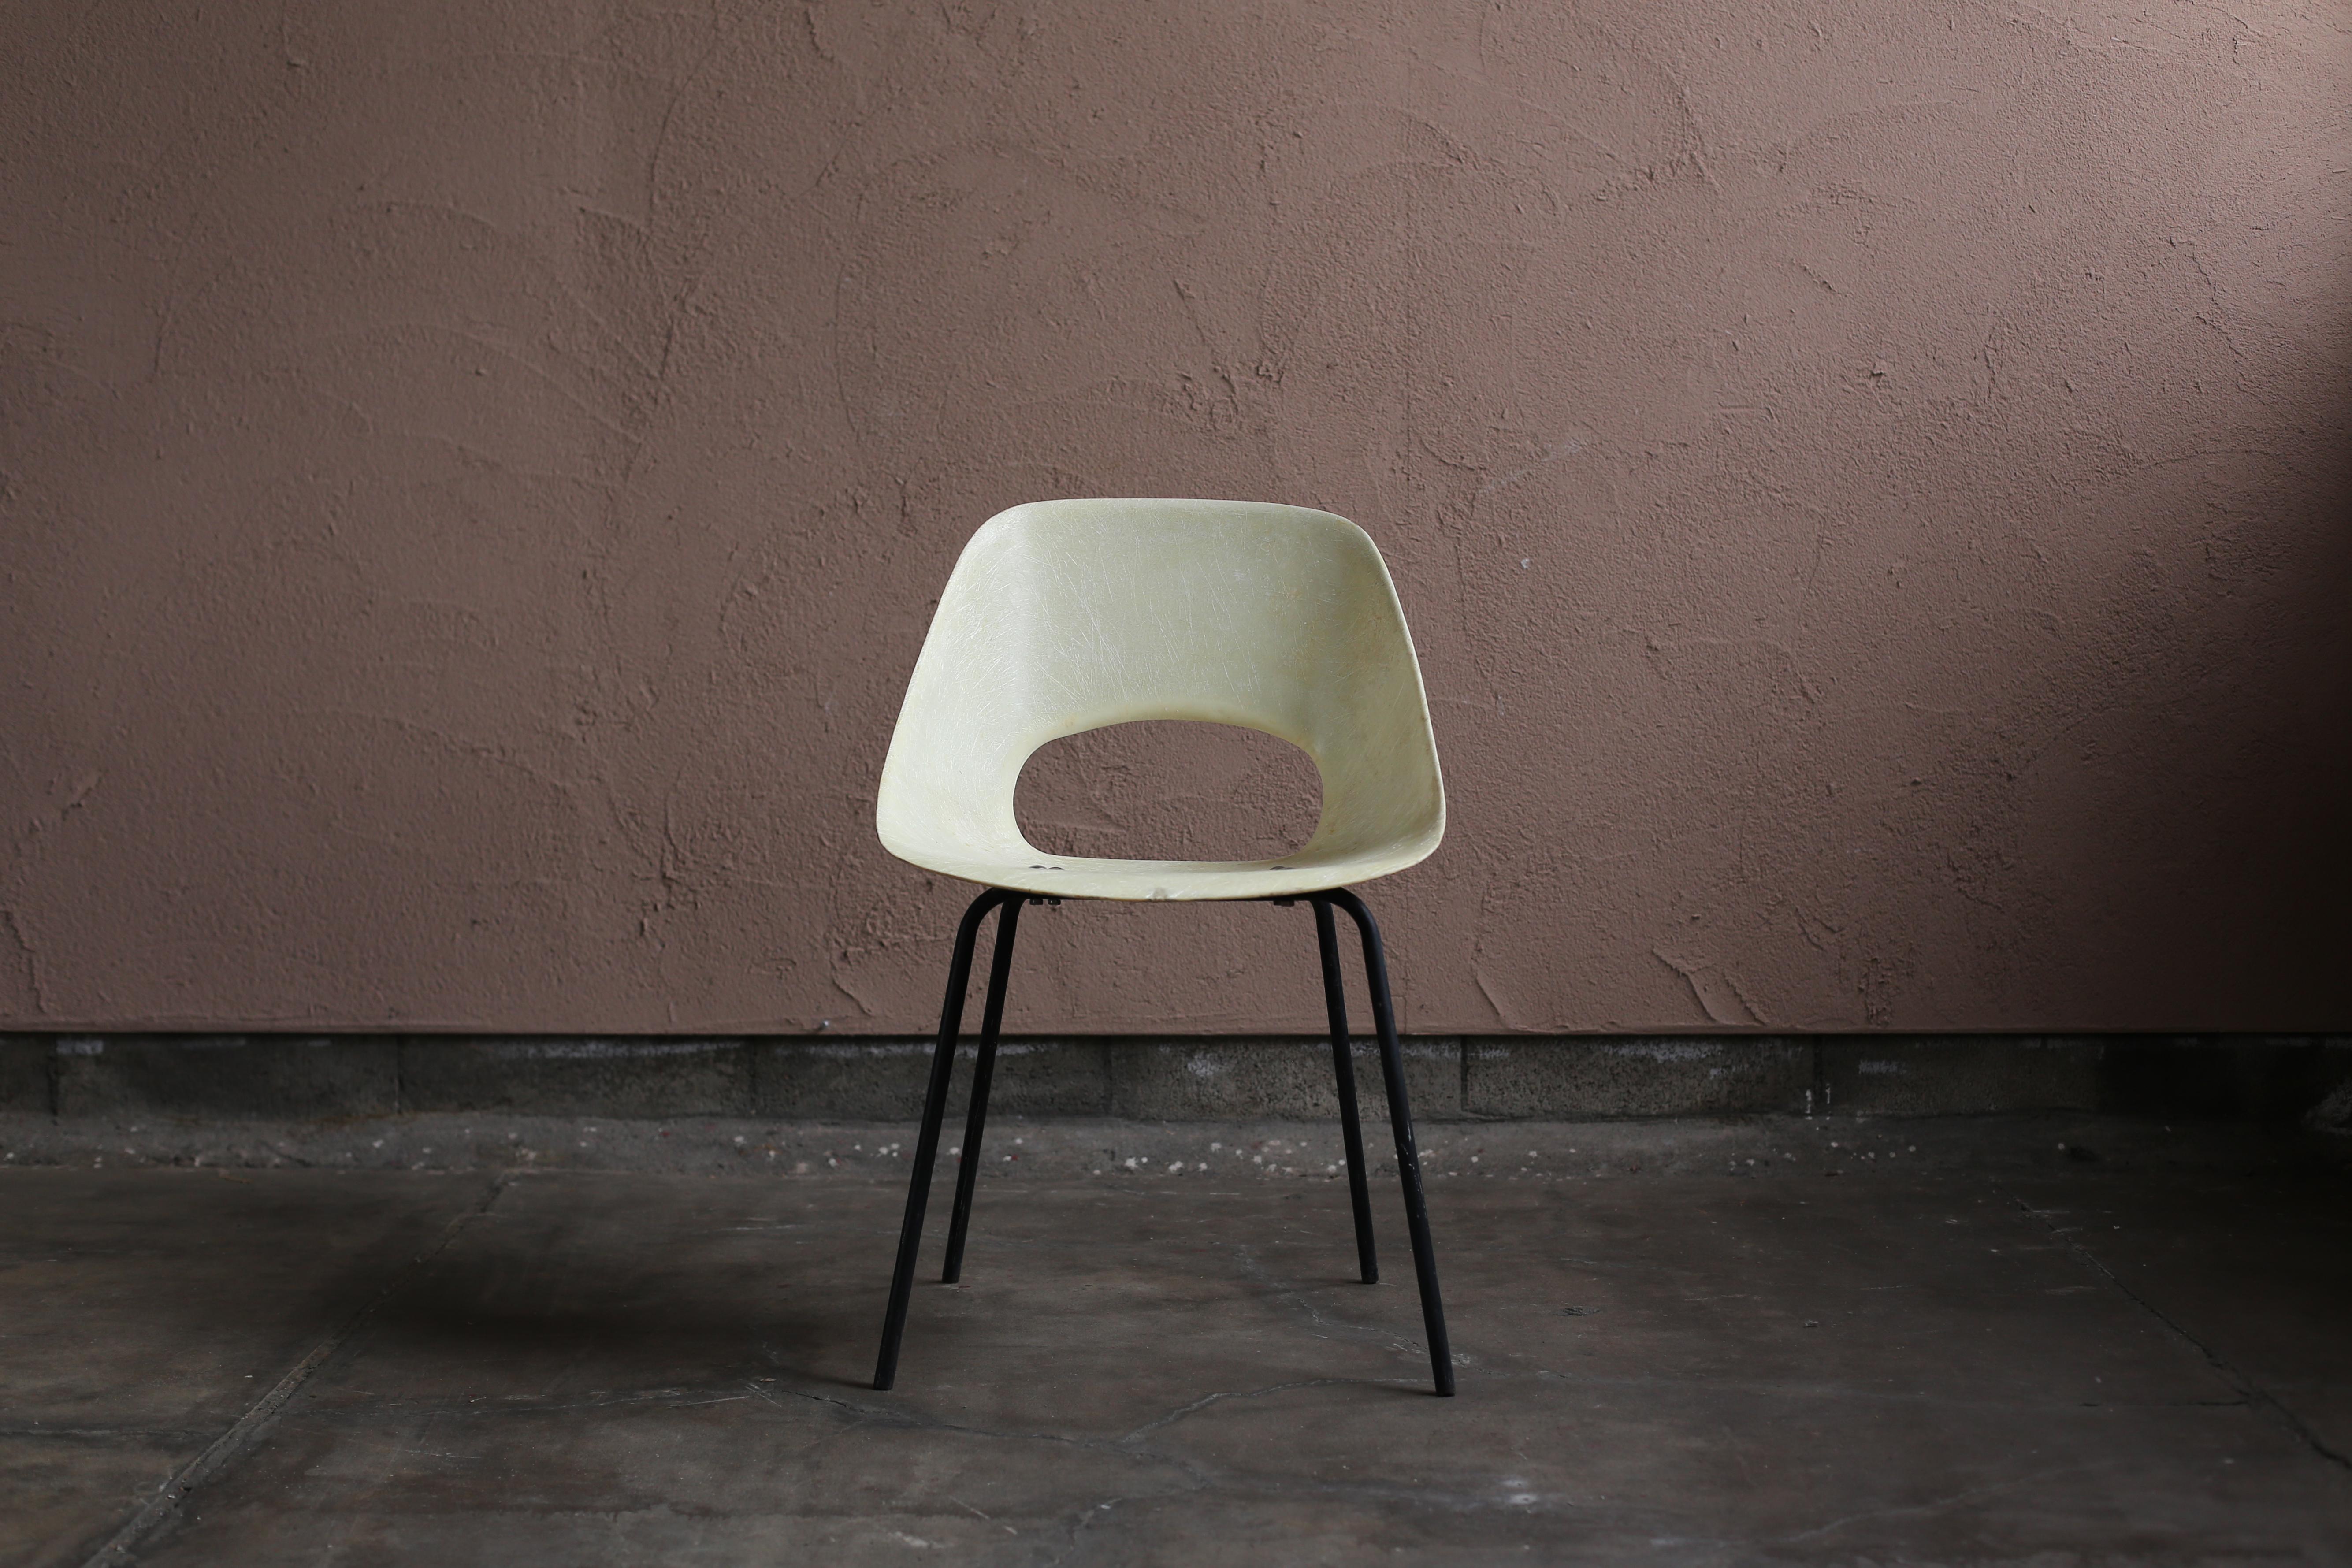 French “Tonneau” Fiberglass Chair by Pierre Guariche